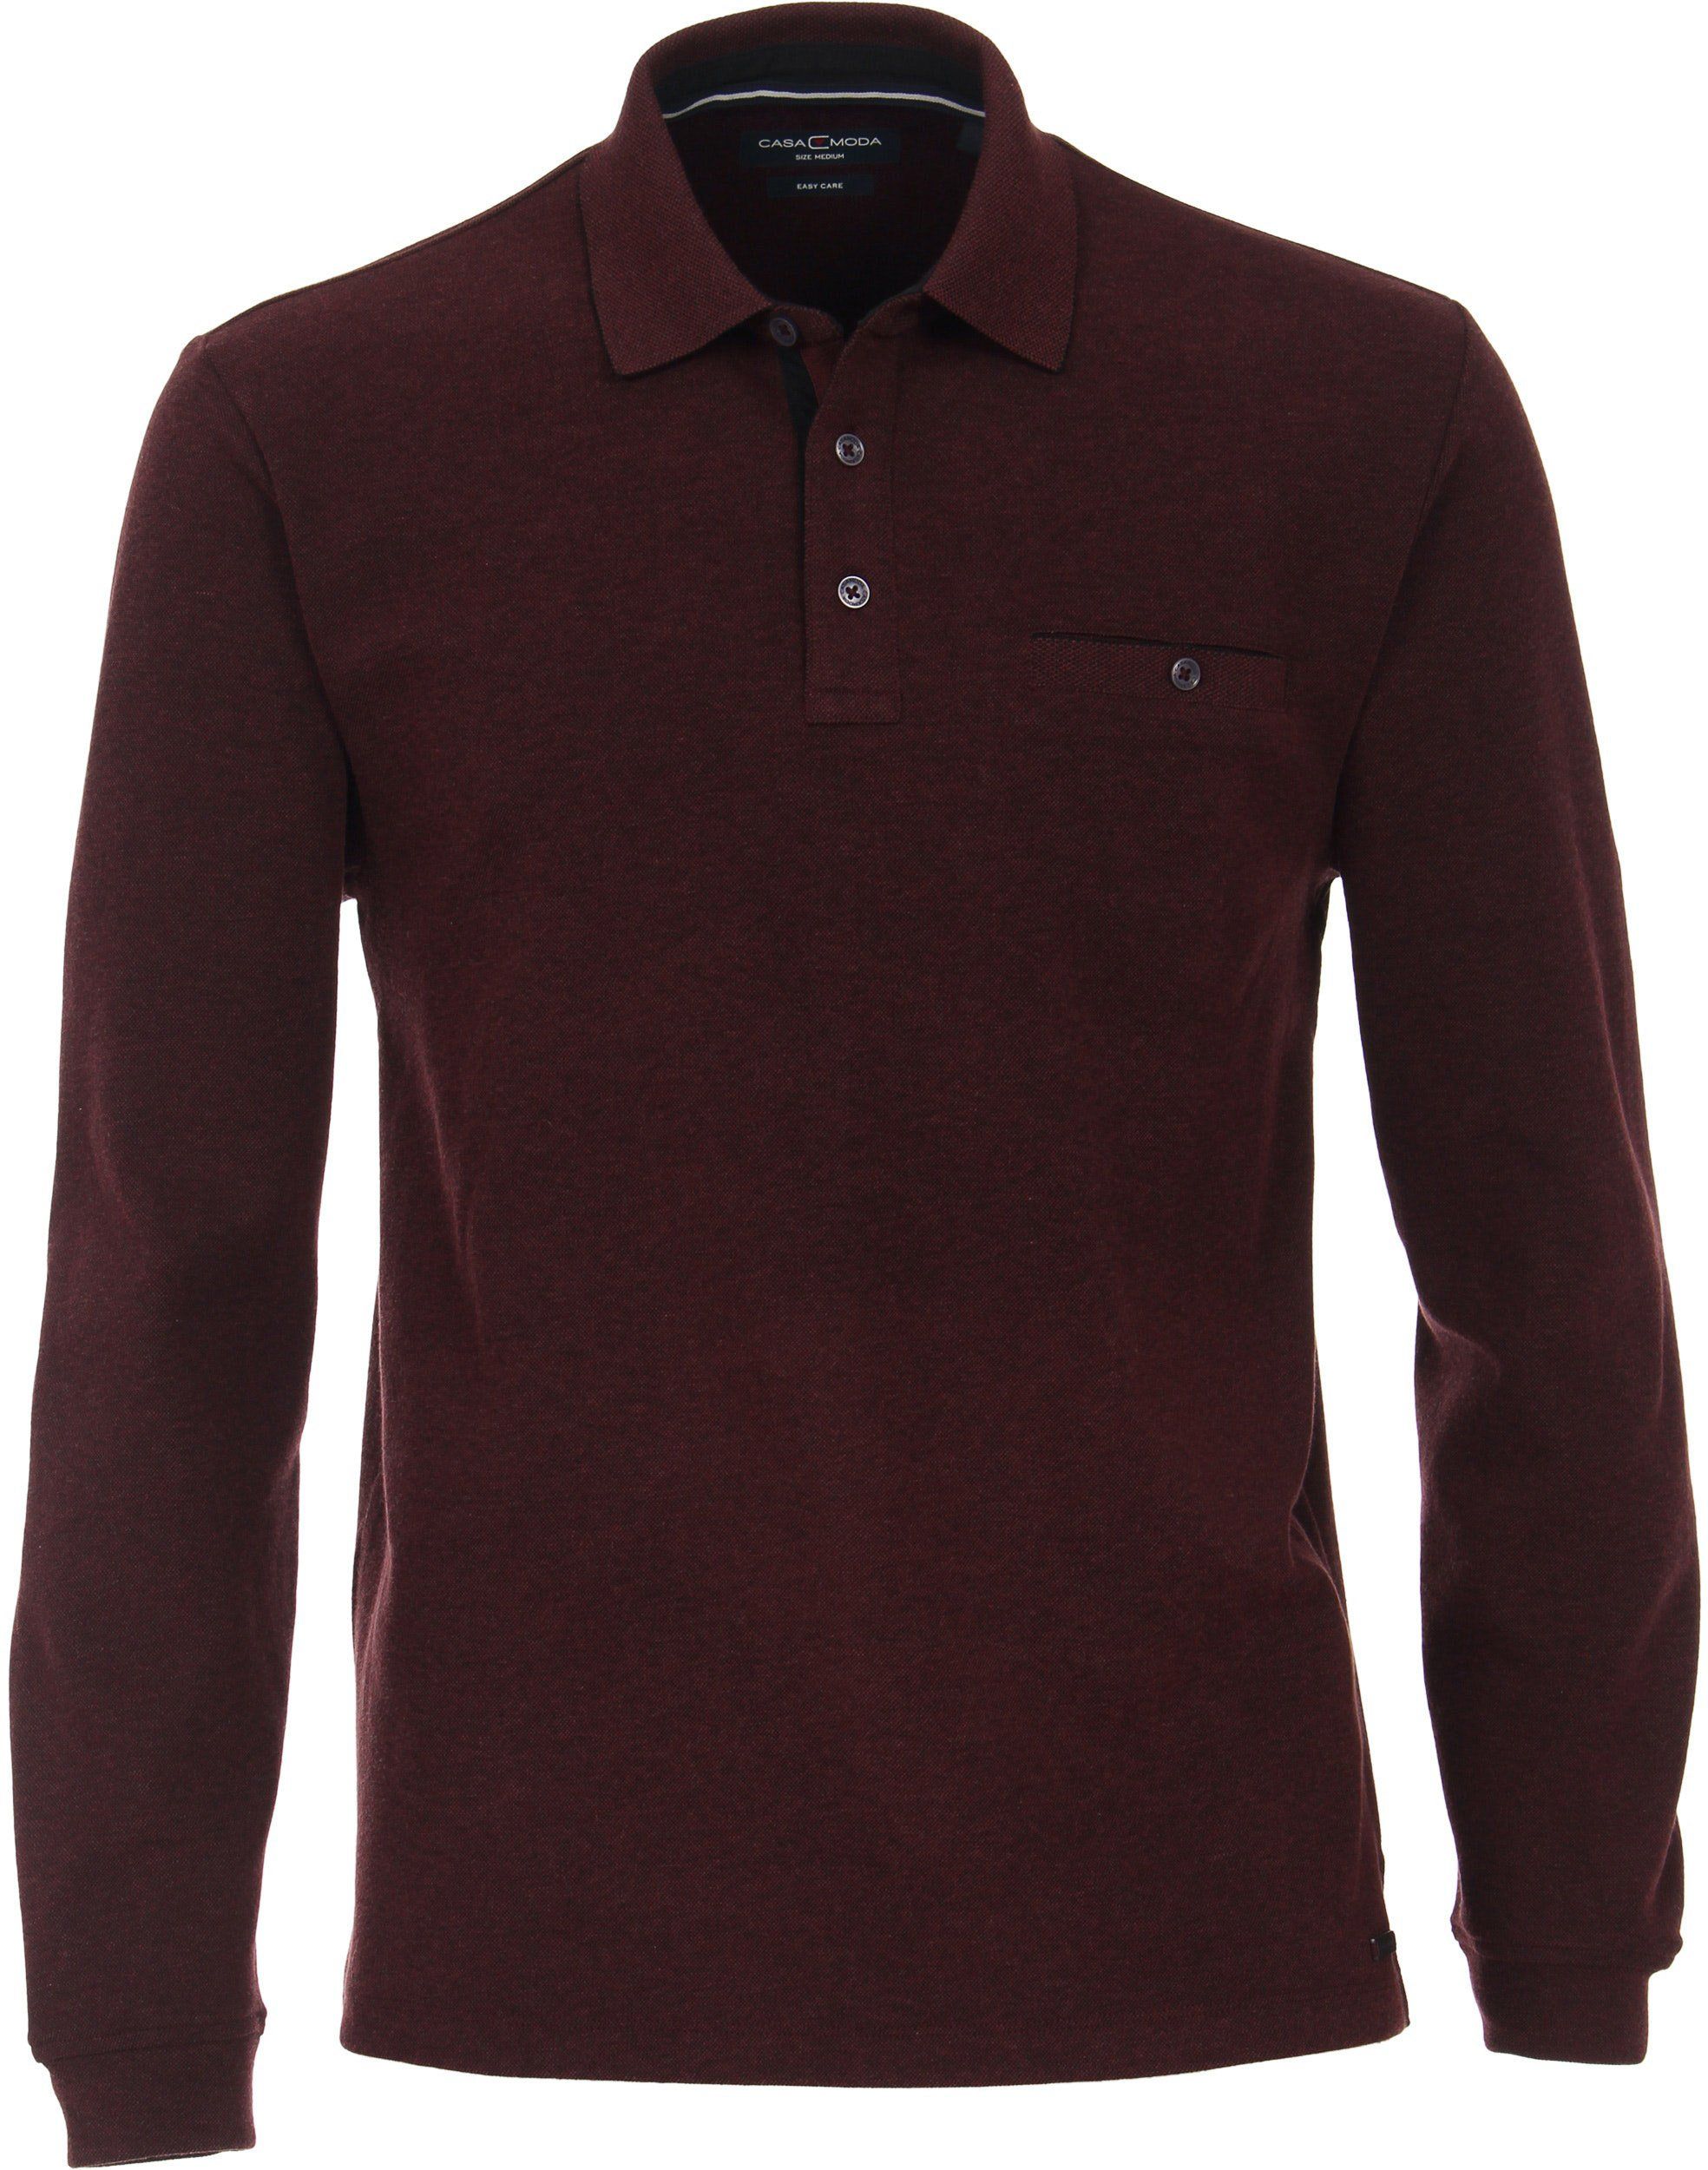 Casa Moda Poloshirt LS Bordeaux Red Burgundy size 3XL